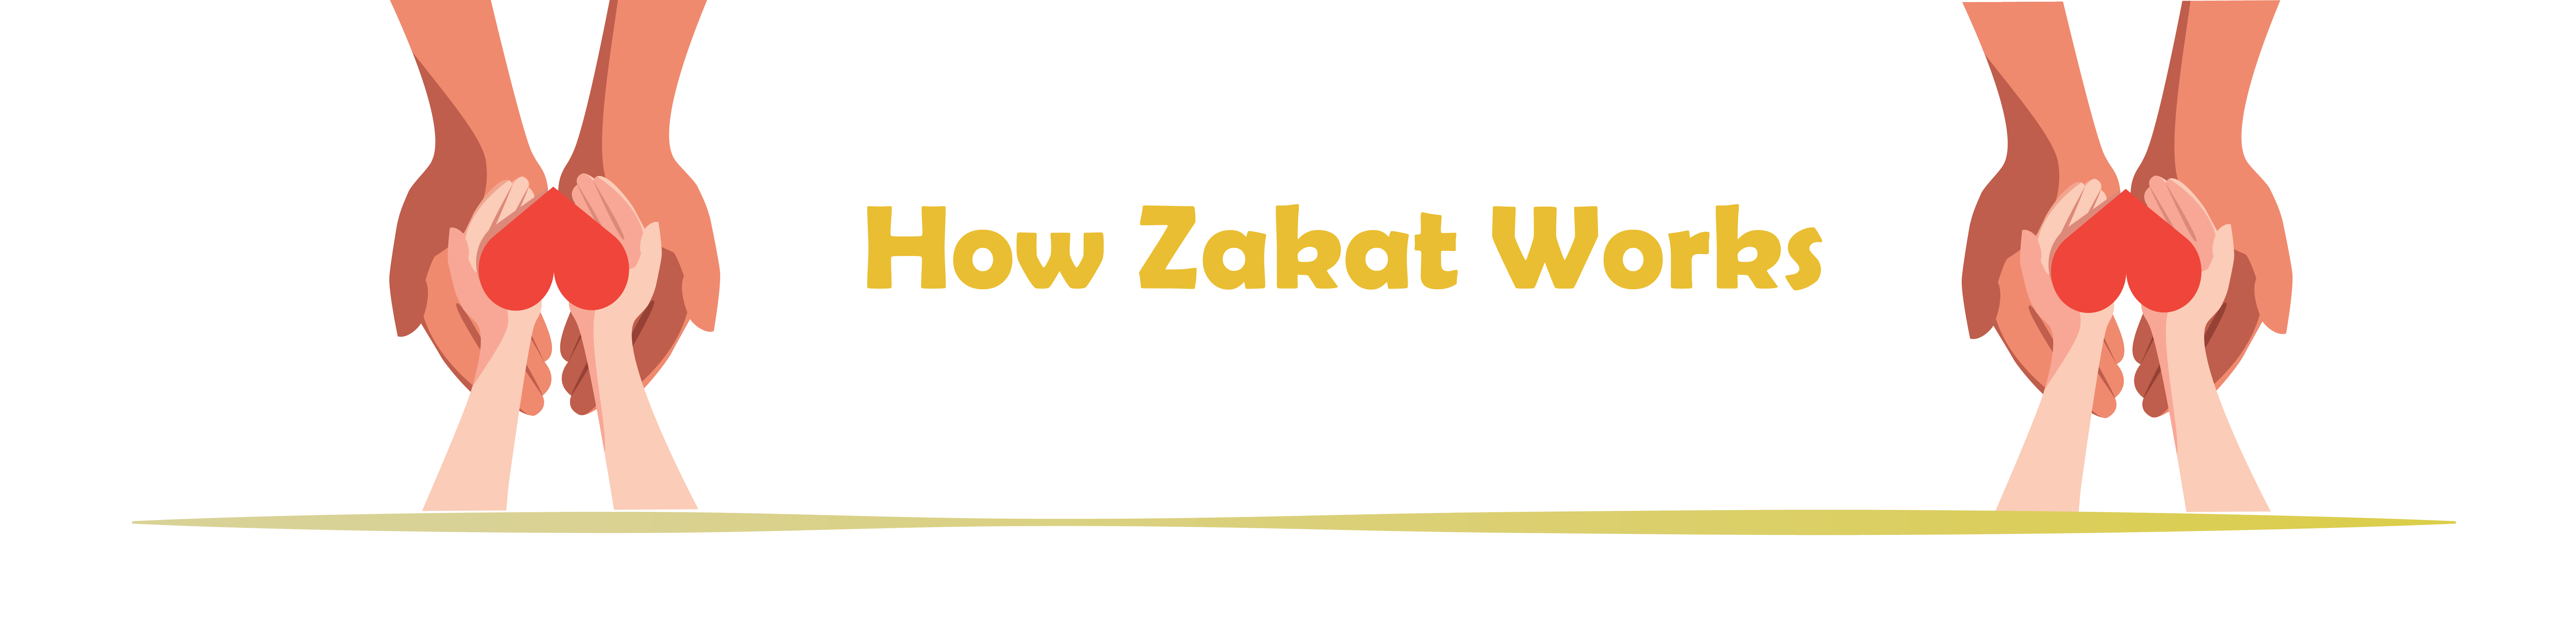 how zakat works banner